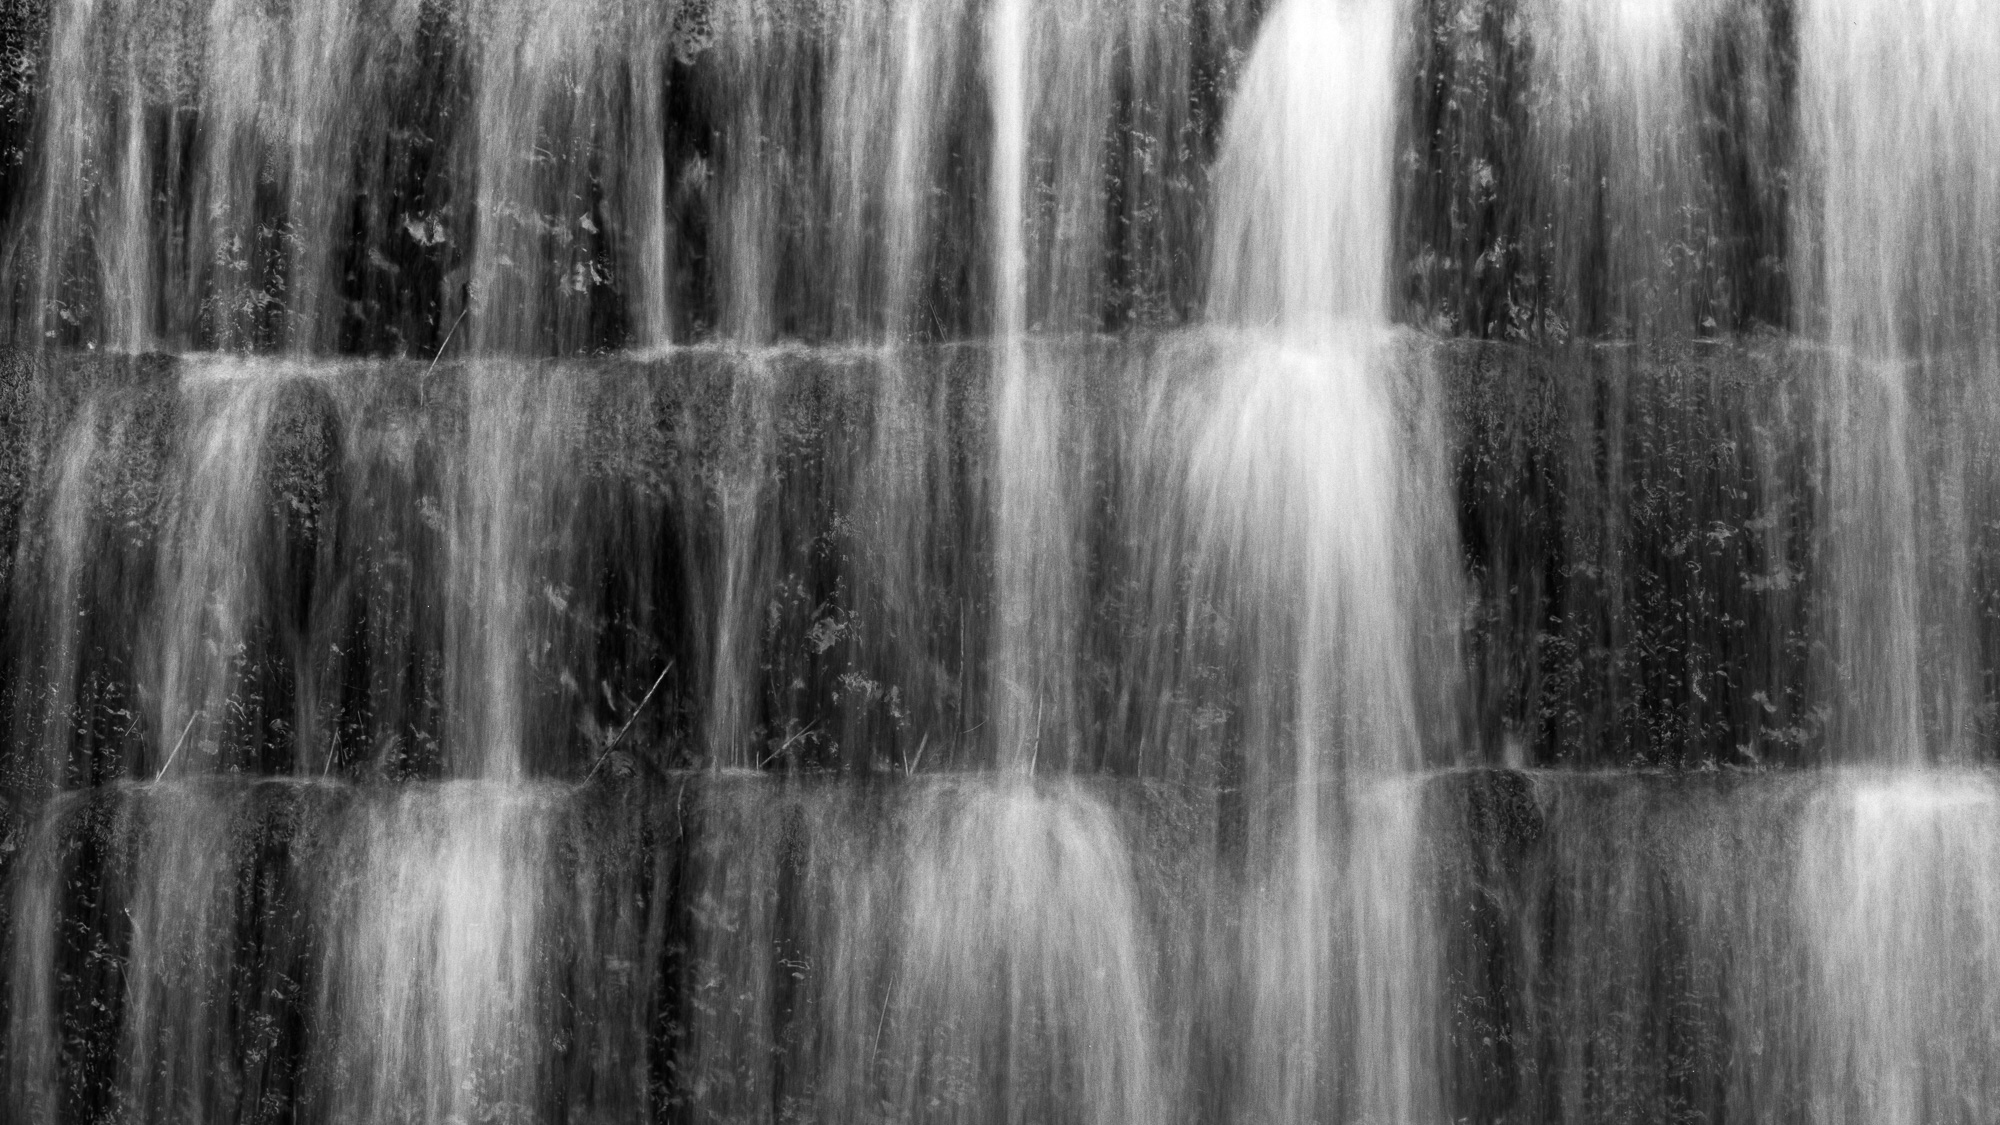 Water steps - Ilford Delta 100 4x5 - Chroma Camera